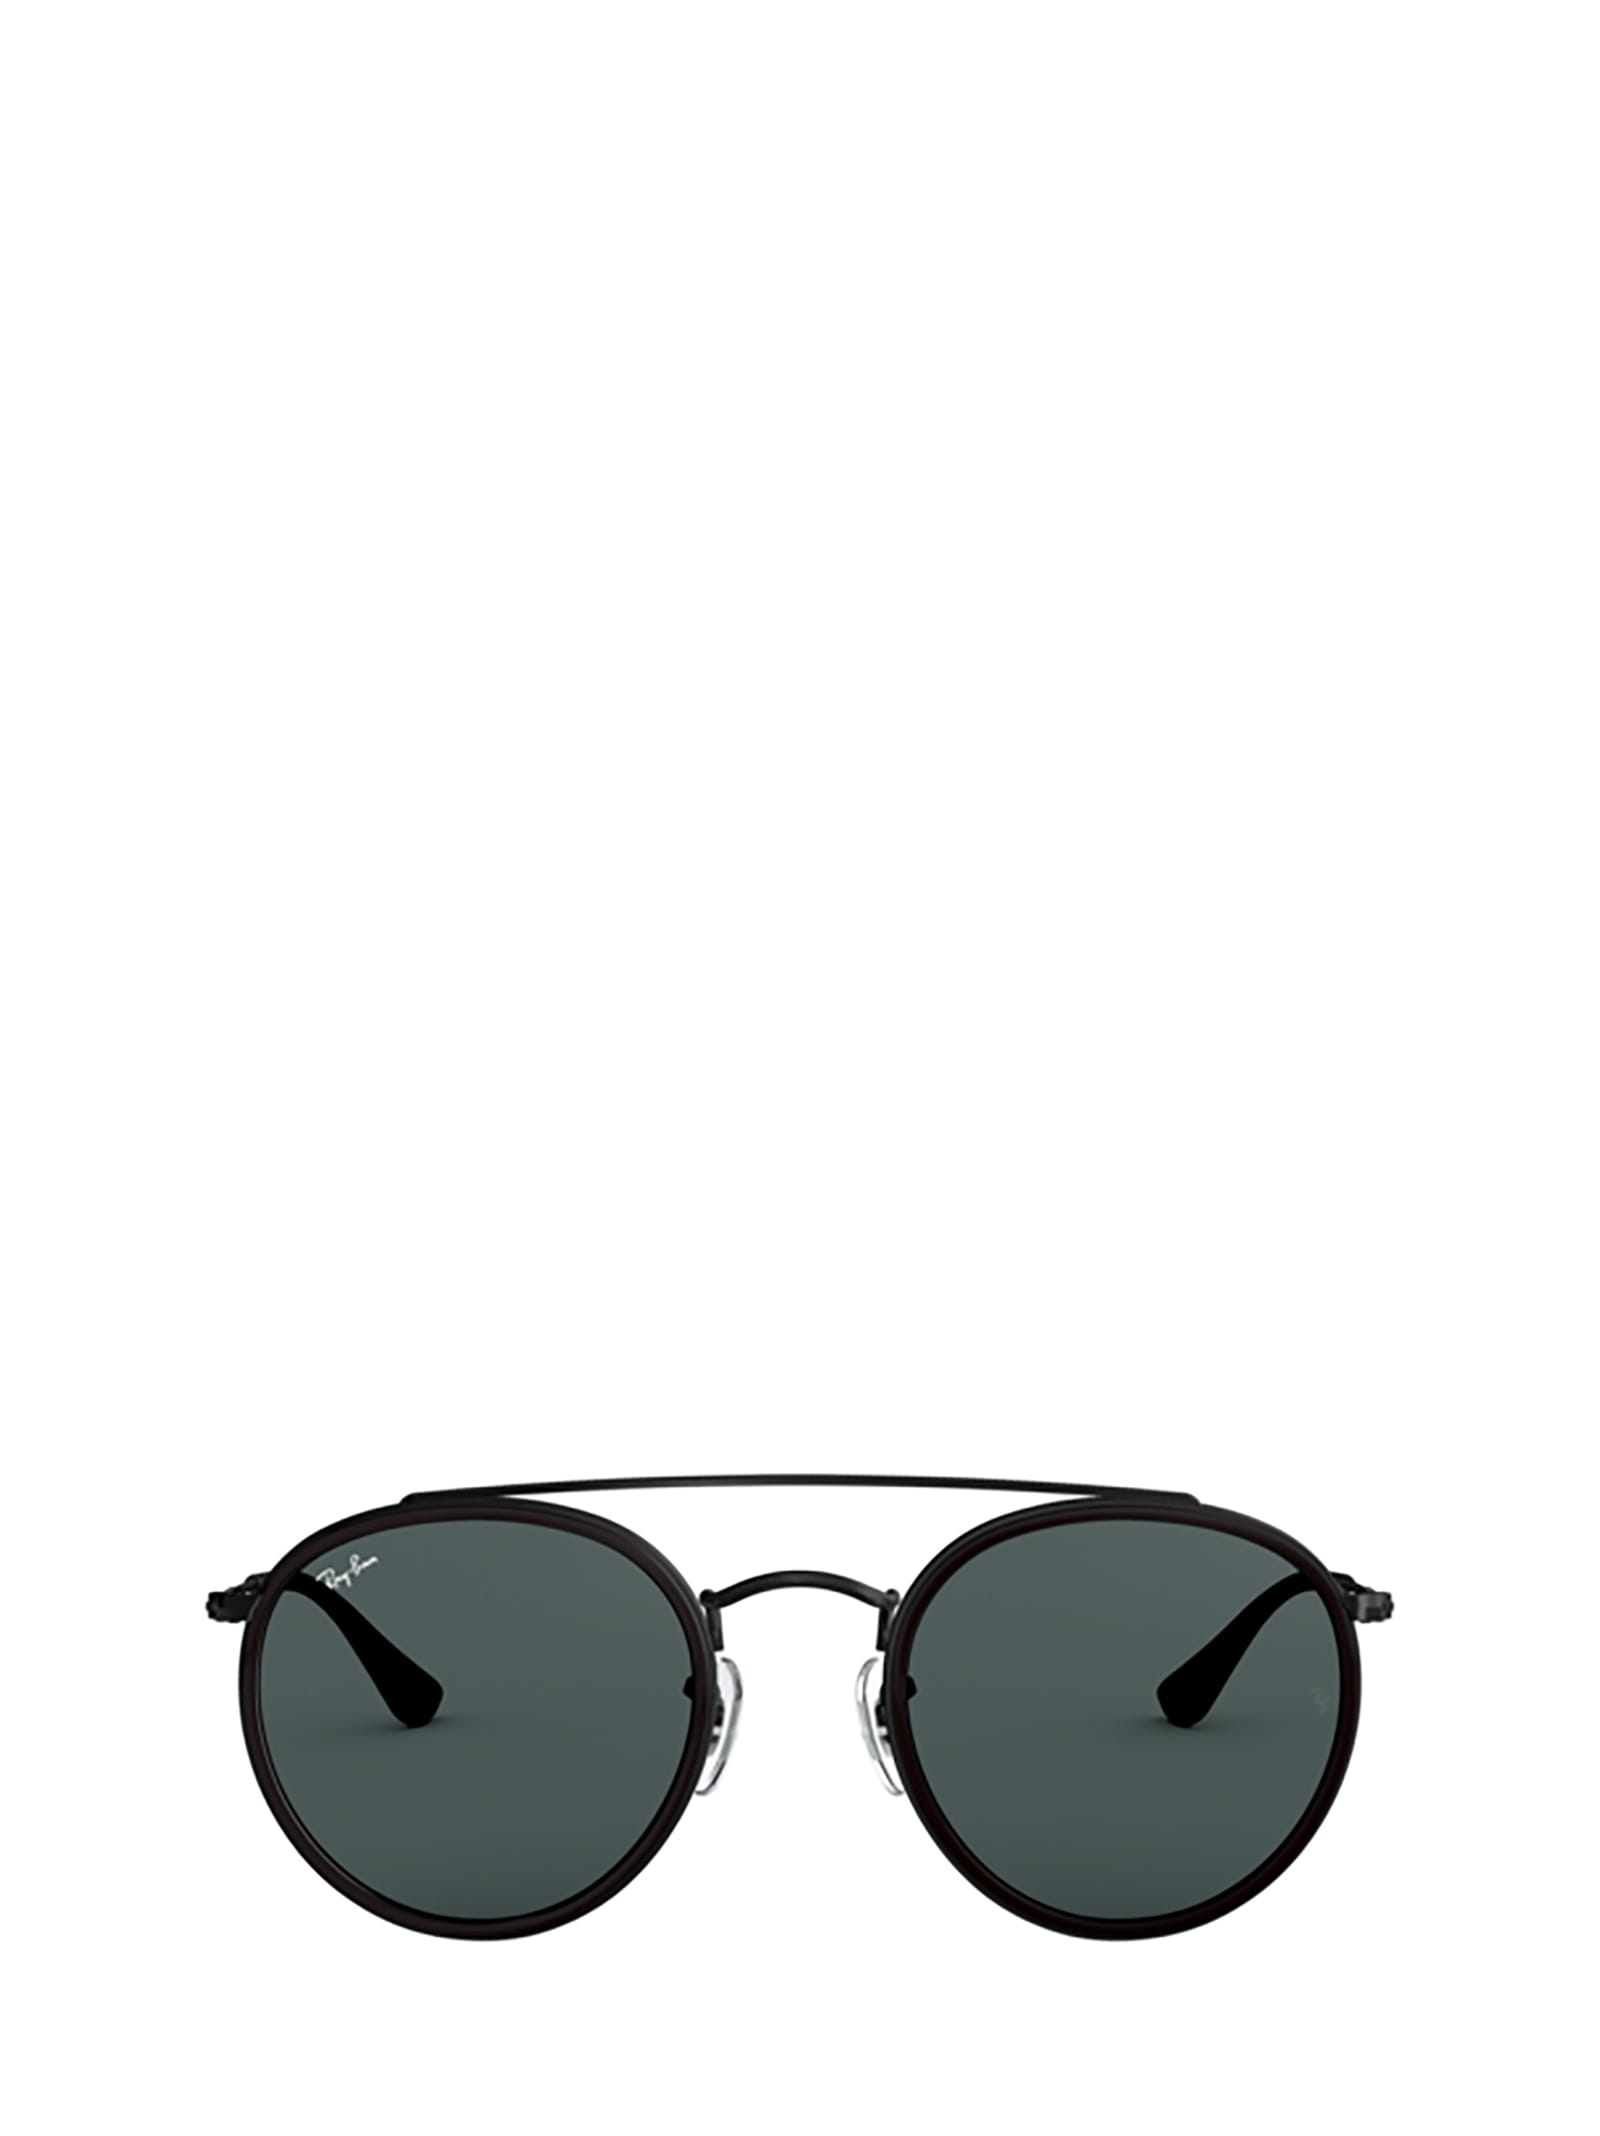 Ray Ban Ray-ban Rb3647n Black Sunglasses